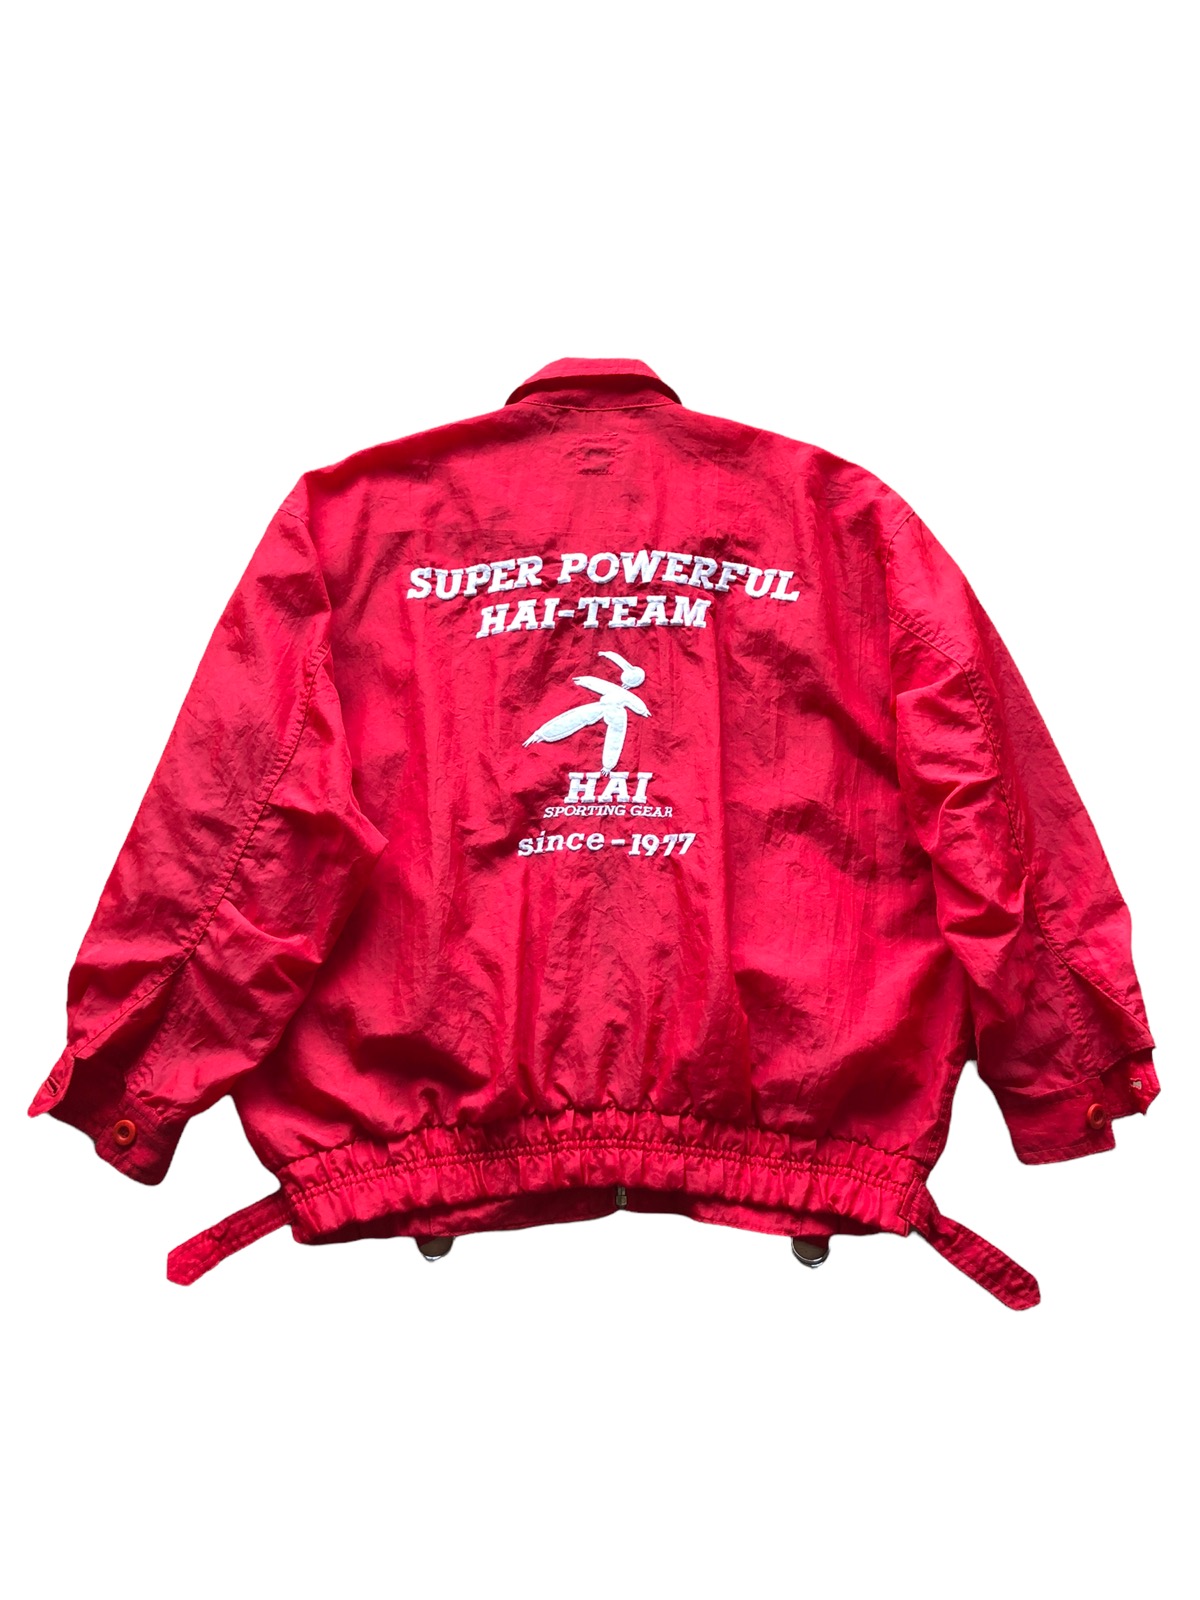 Issey Miyake - 1980s Issey Miyake Hai Sporting Gear Team Bomber Jacket